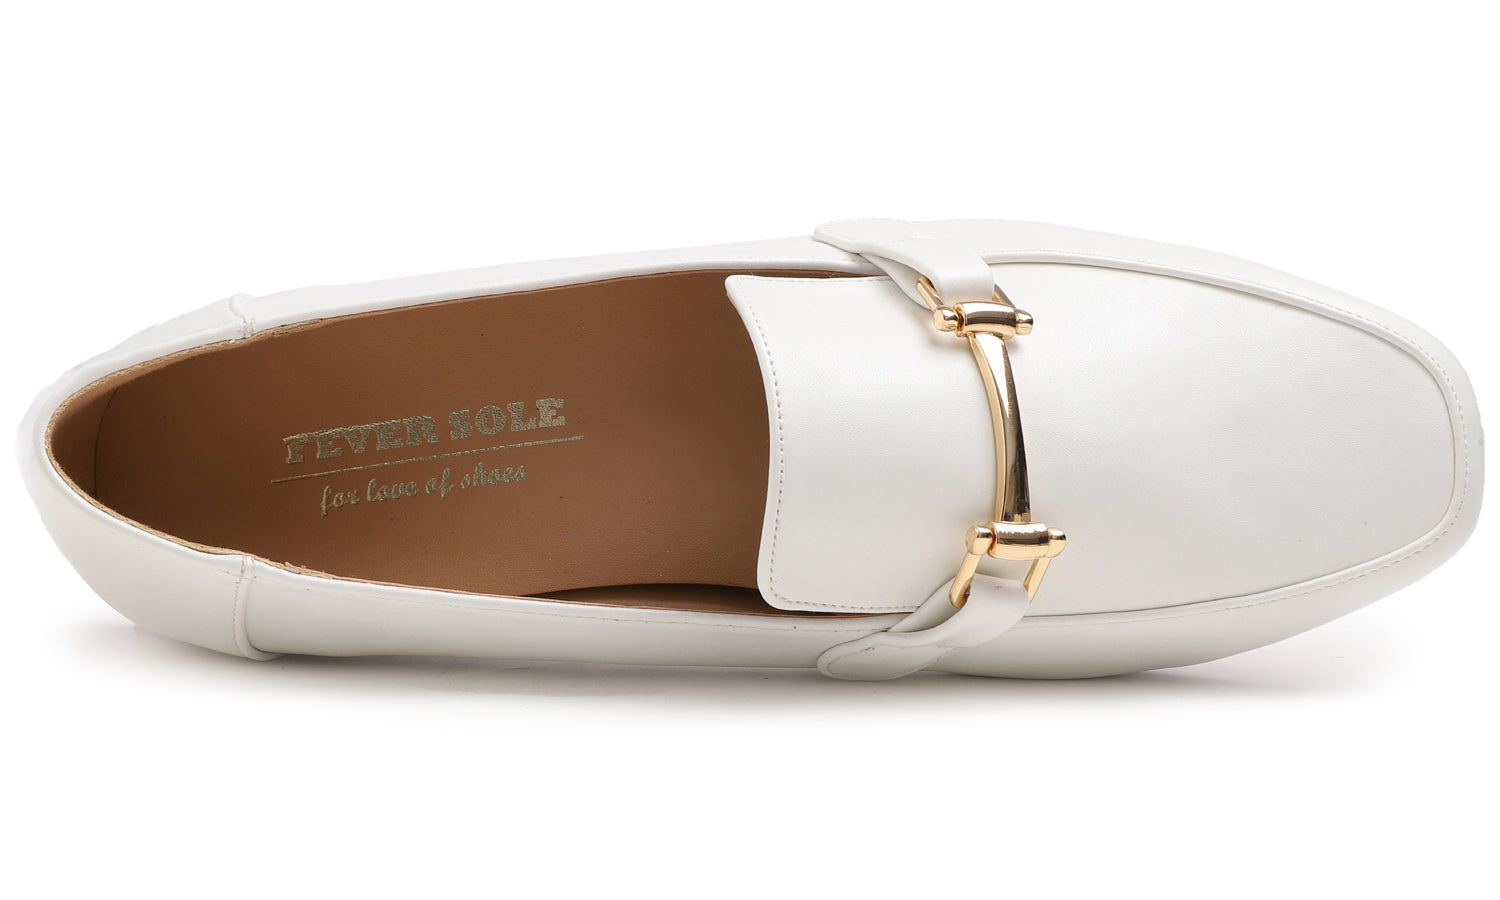 Feversole Women's Fashion Trim Deco Loafer Flats White Plain Vegan Leather